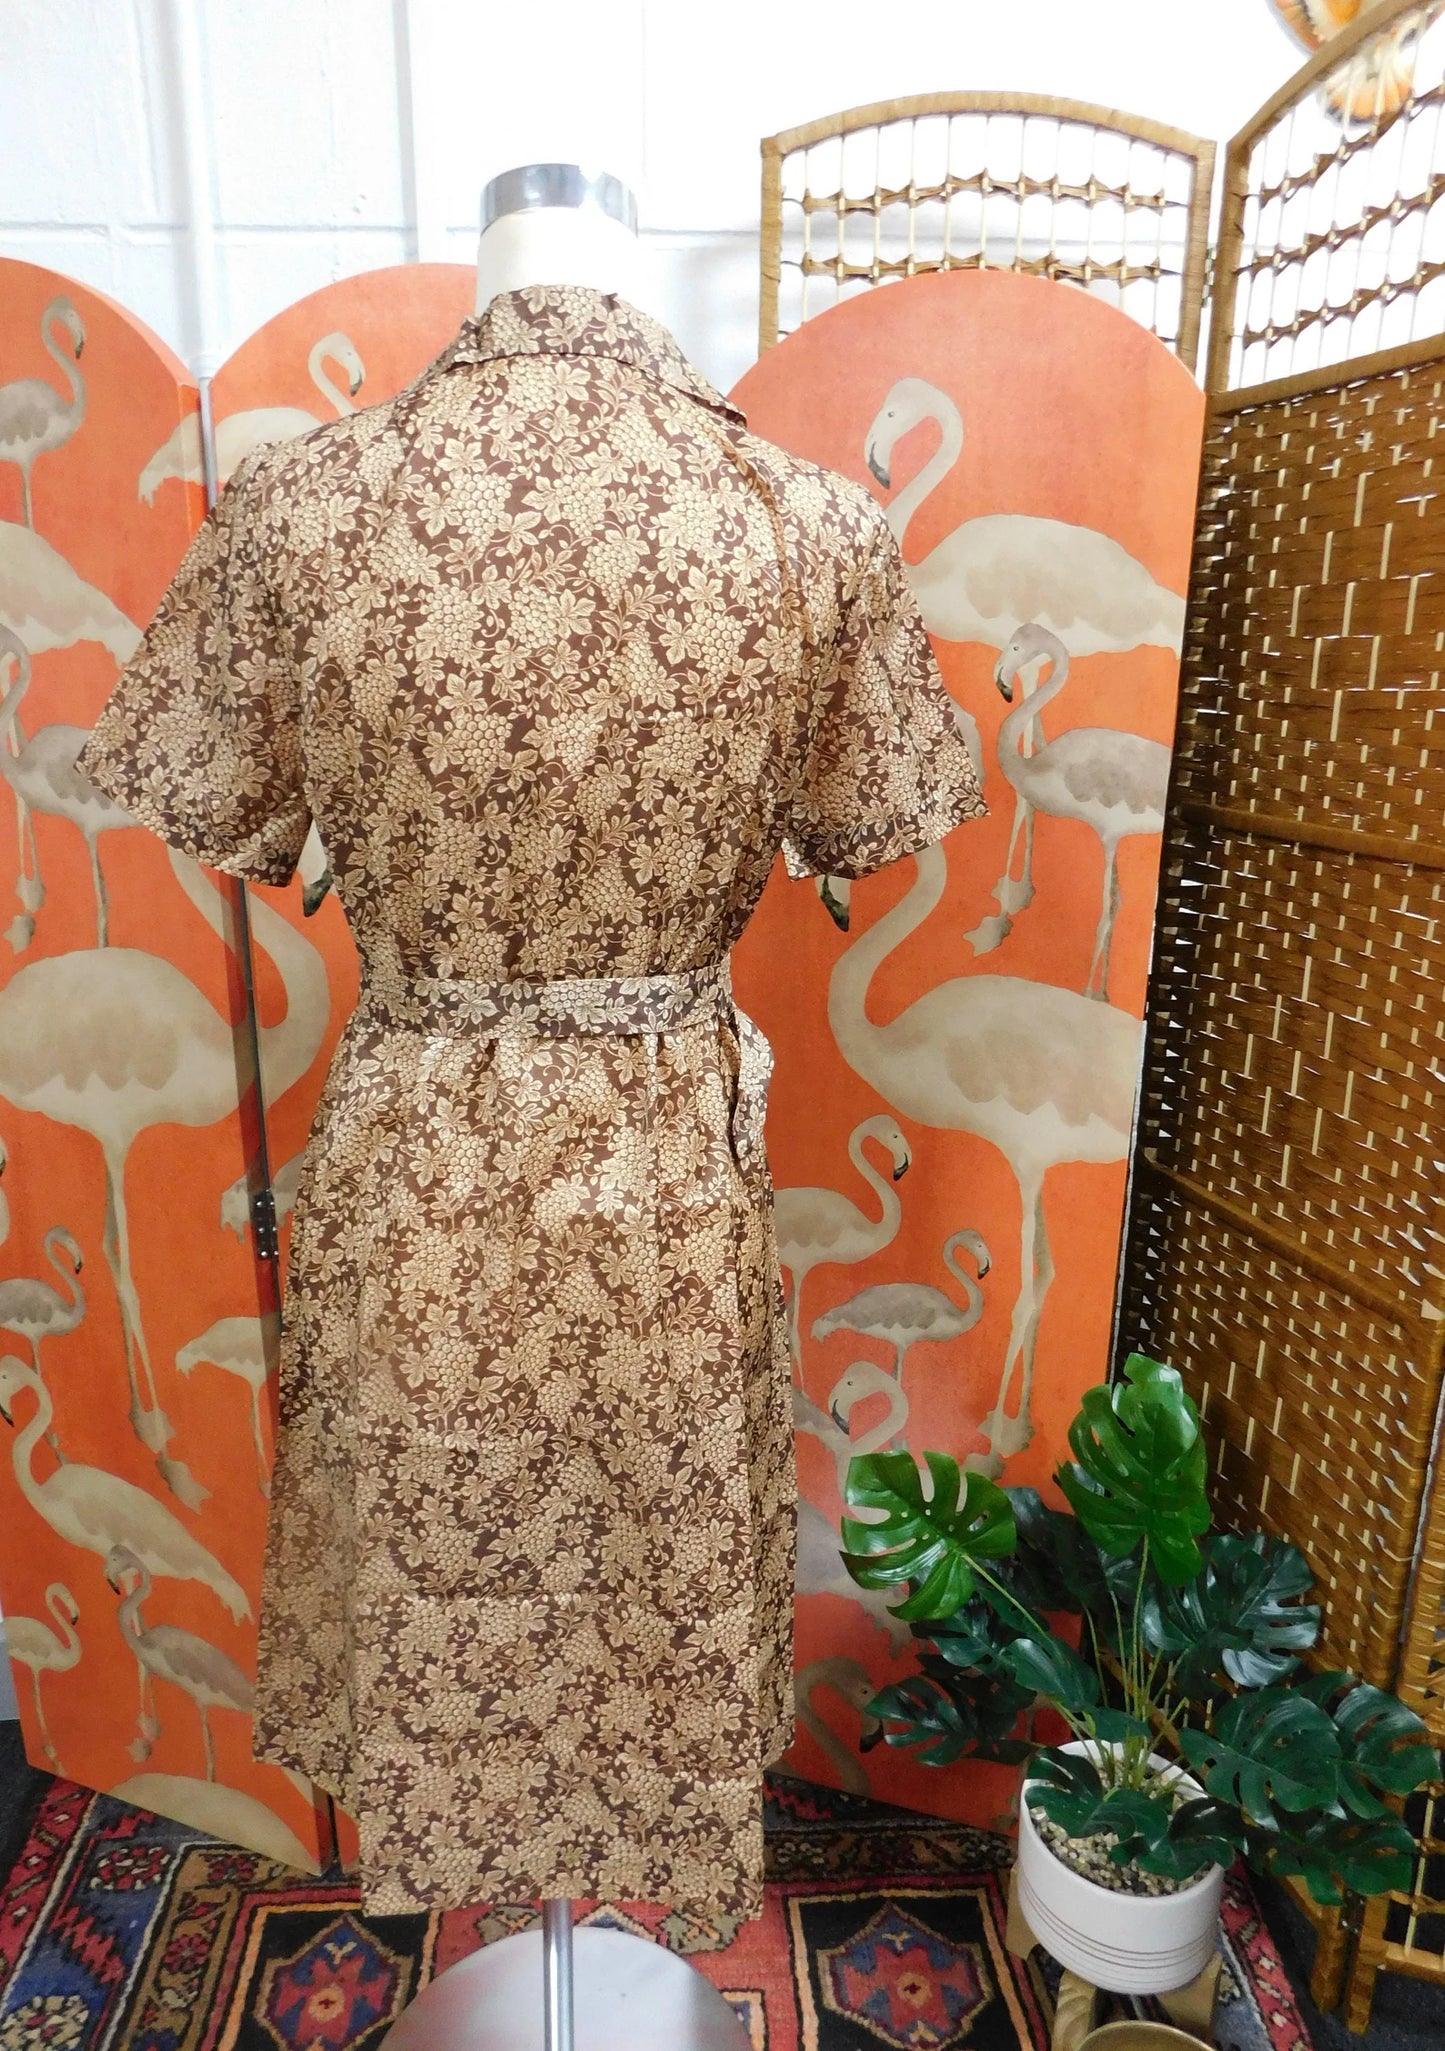 Groovy mod 1960's Print Dress with matching belt